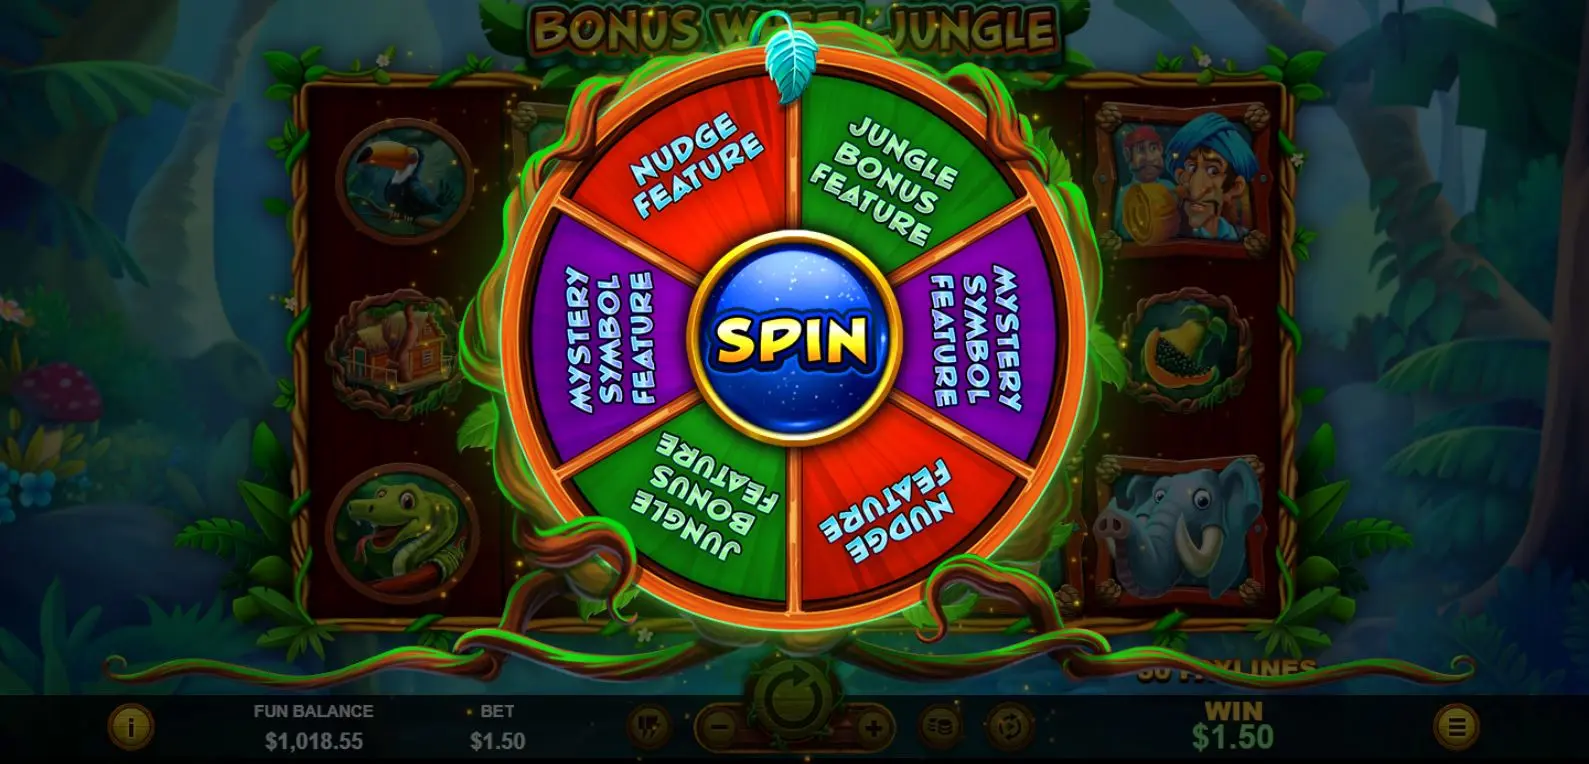 Bonus Wheel Jungle Bonus Wheel Feature